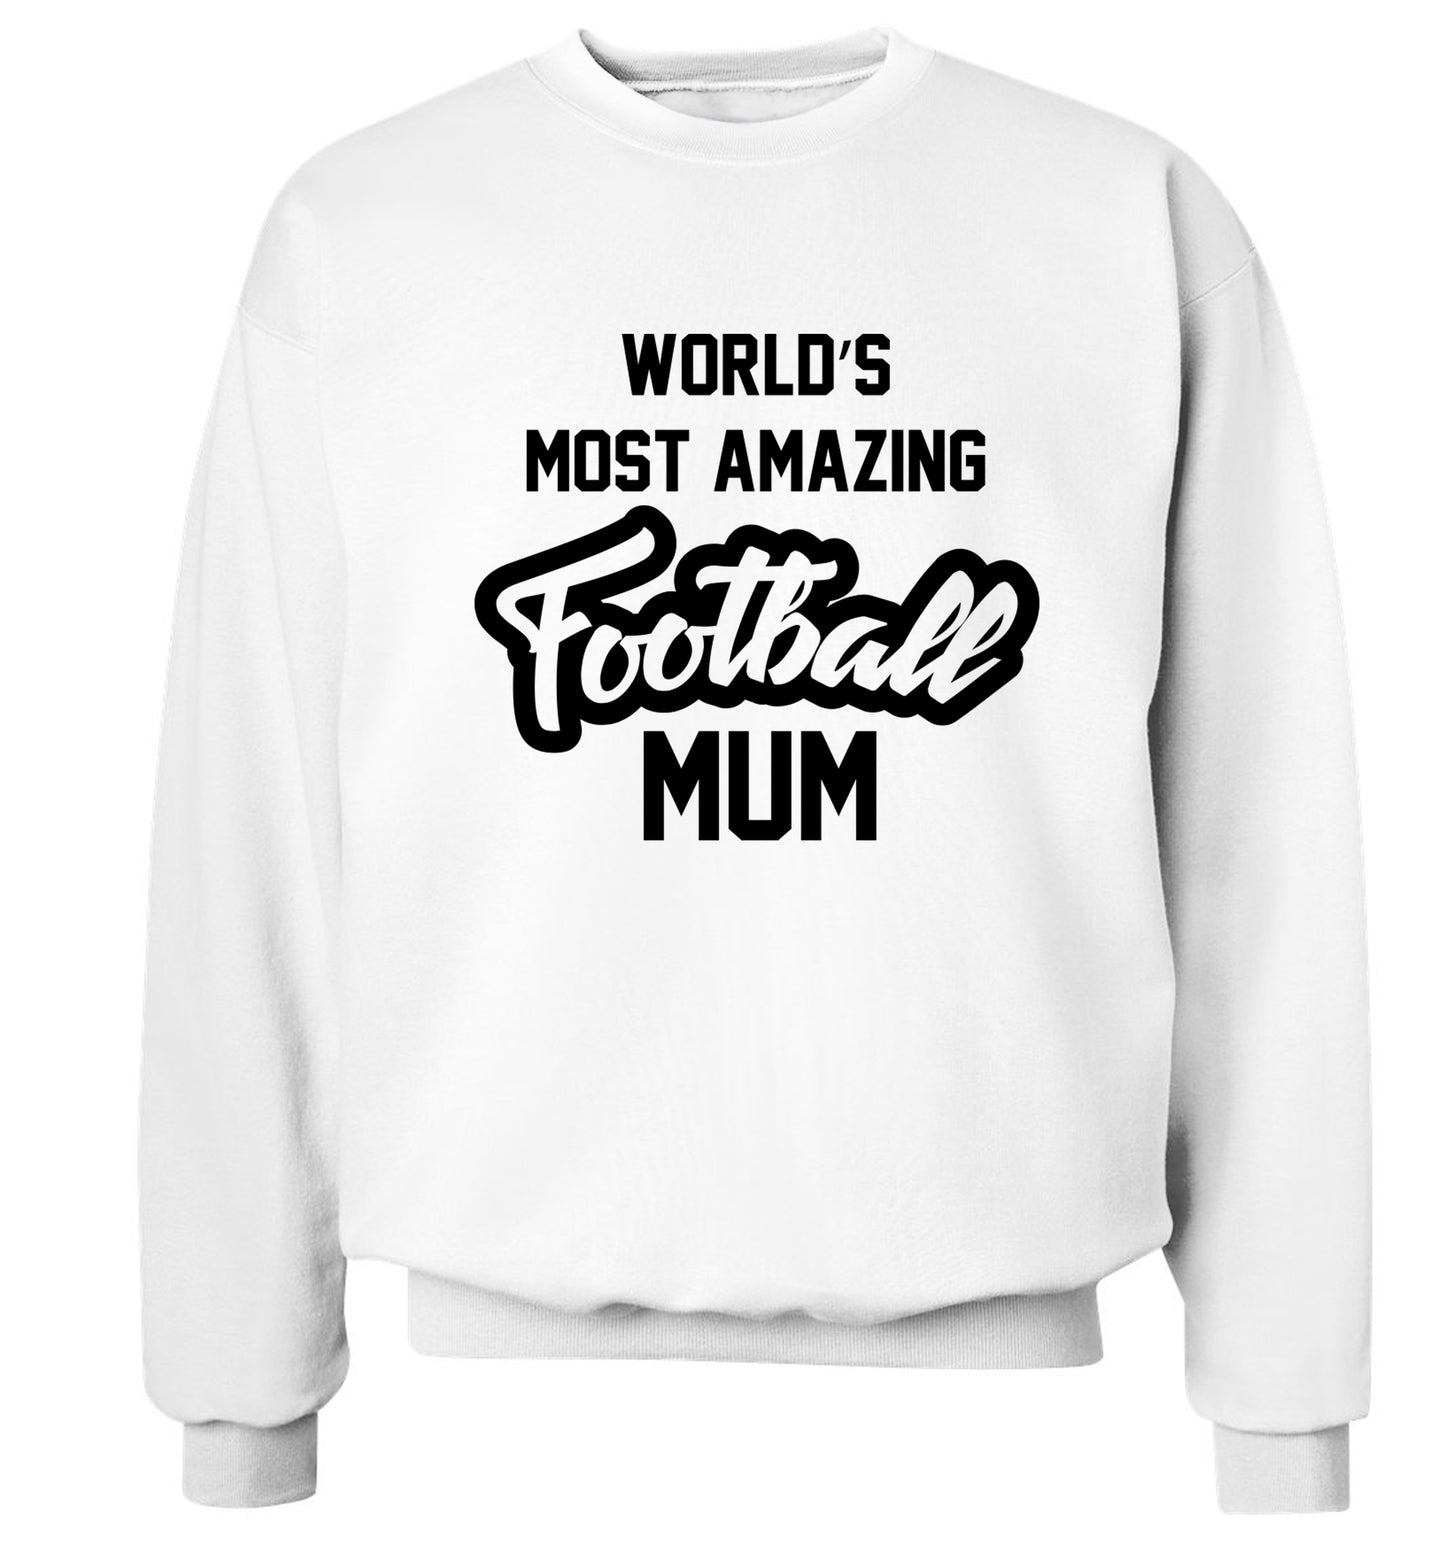 Worlds most amazing football mum Adult's unisexwhite Sweater 2XL